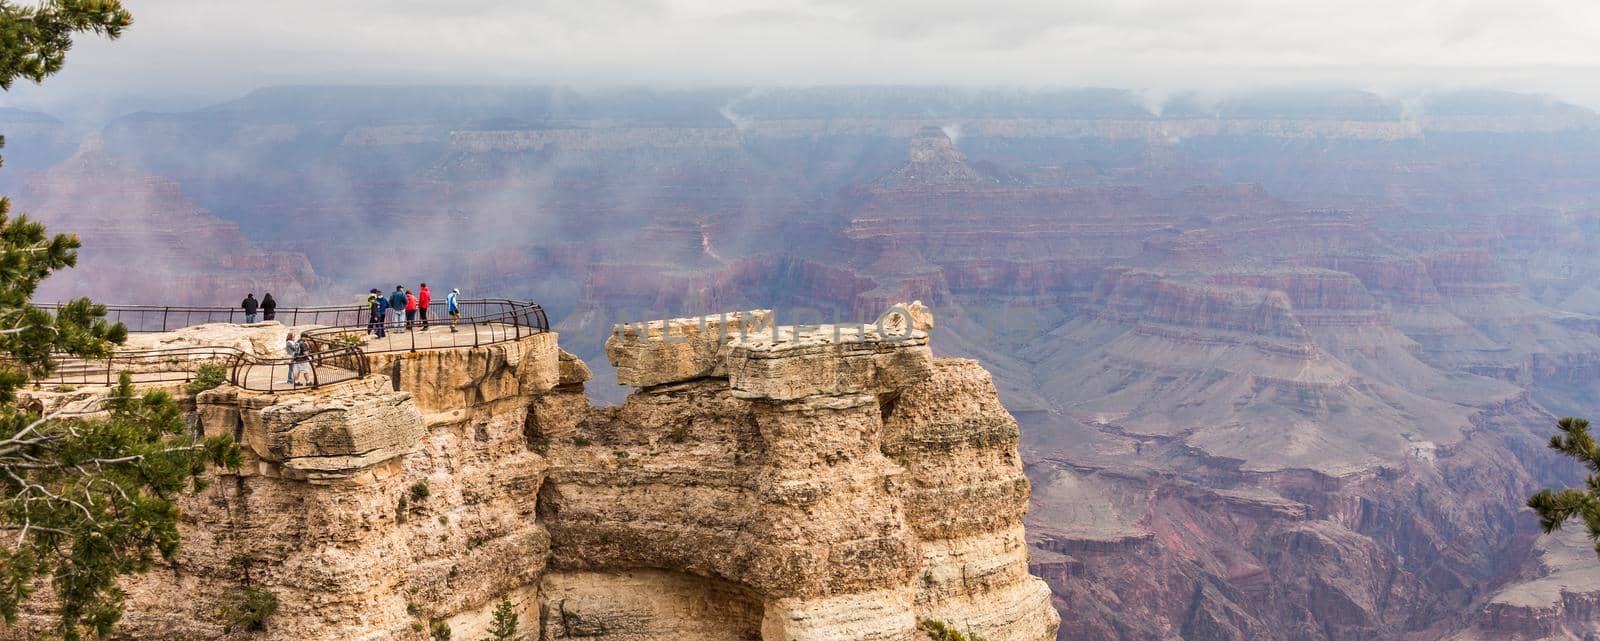 view of Grand Canyon , Arizona, USA by Mariakray